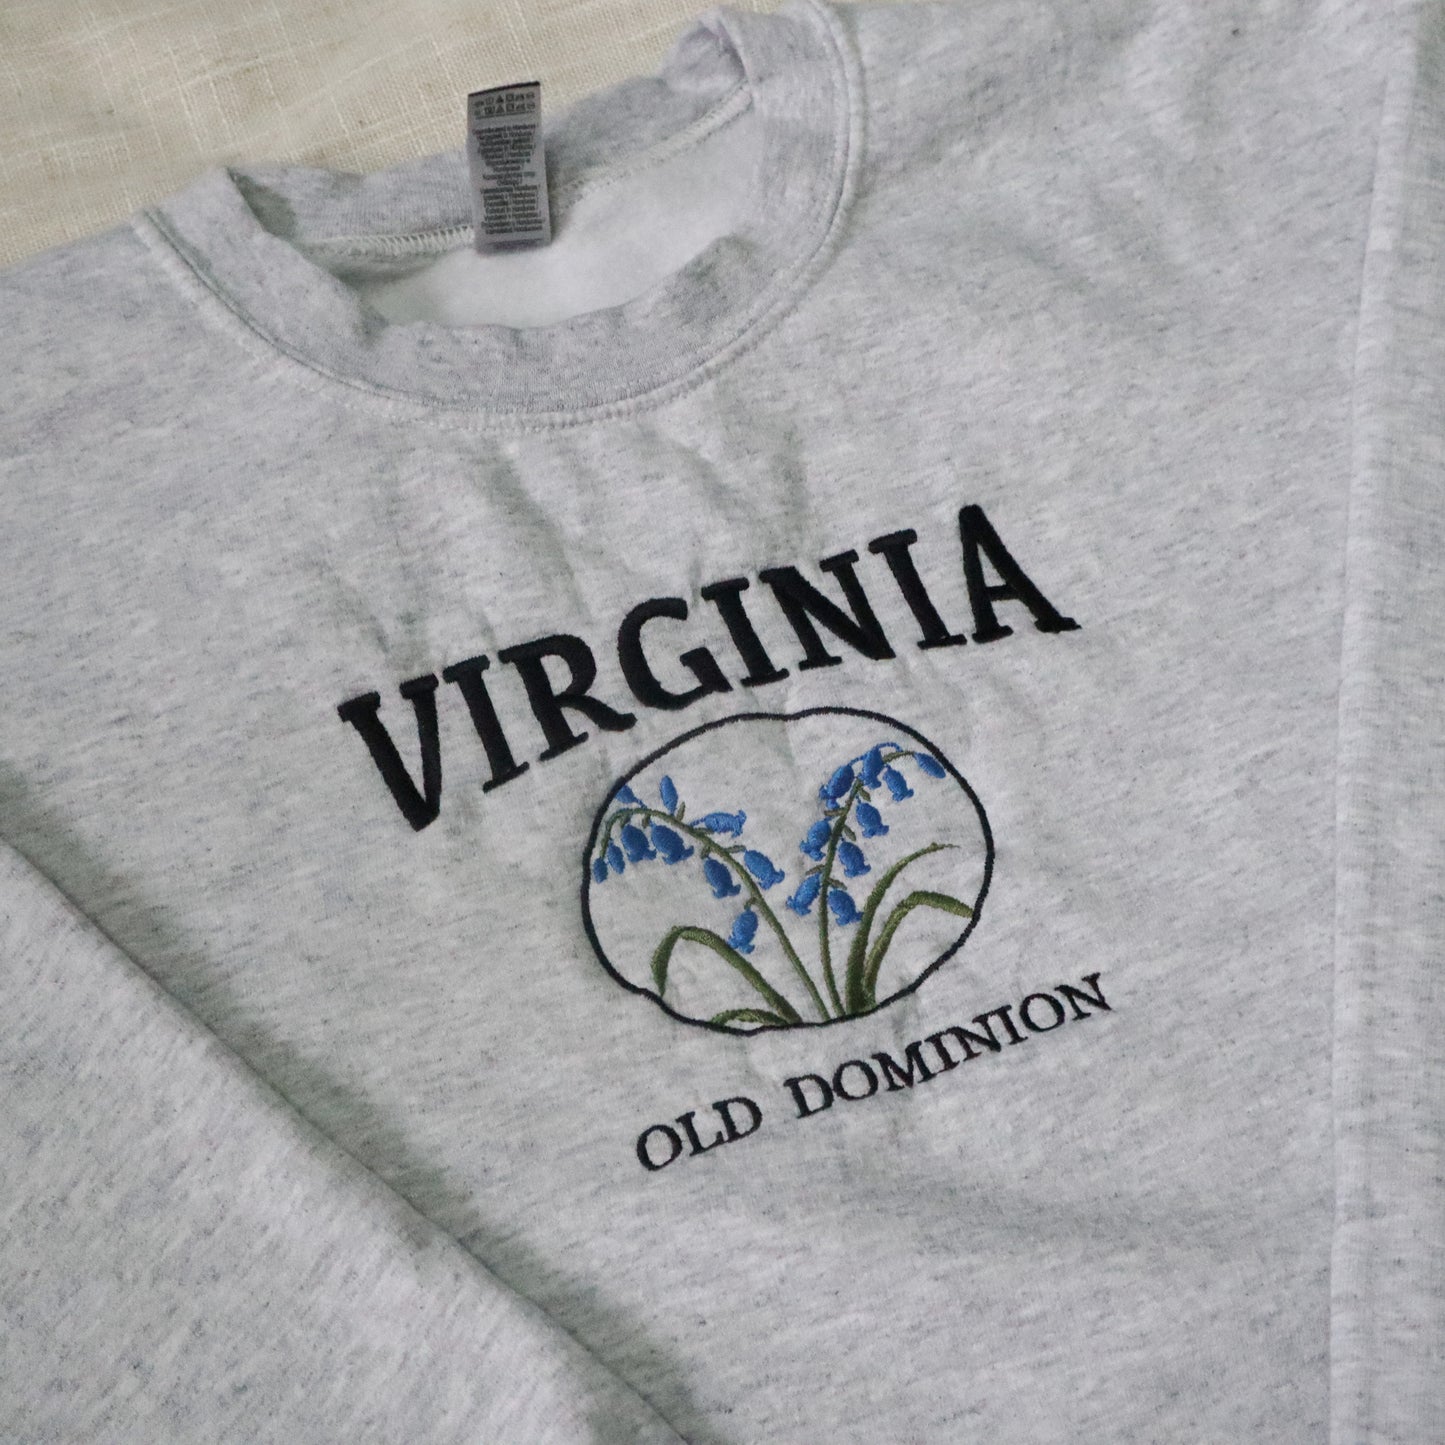 Virginia State Sweater